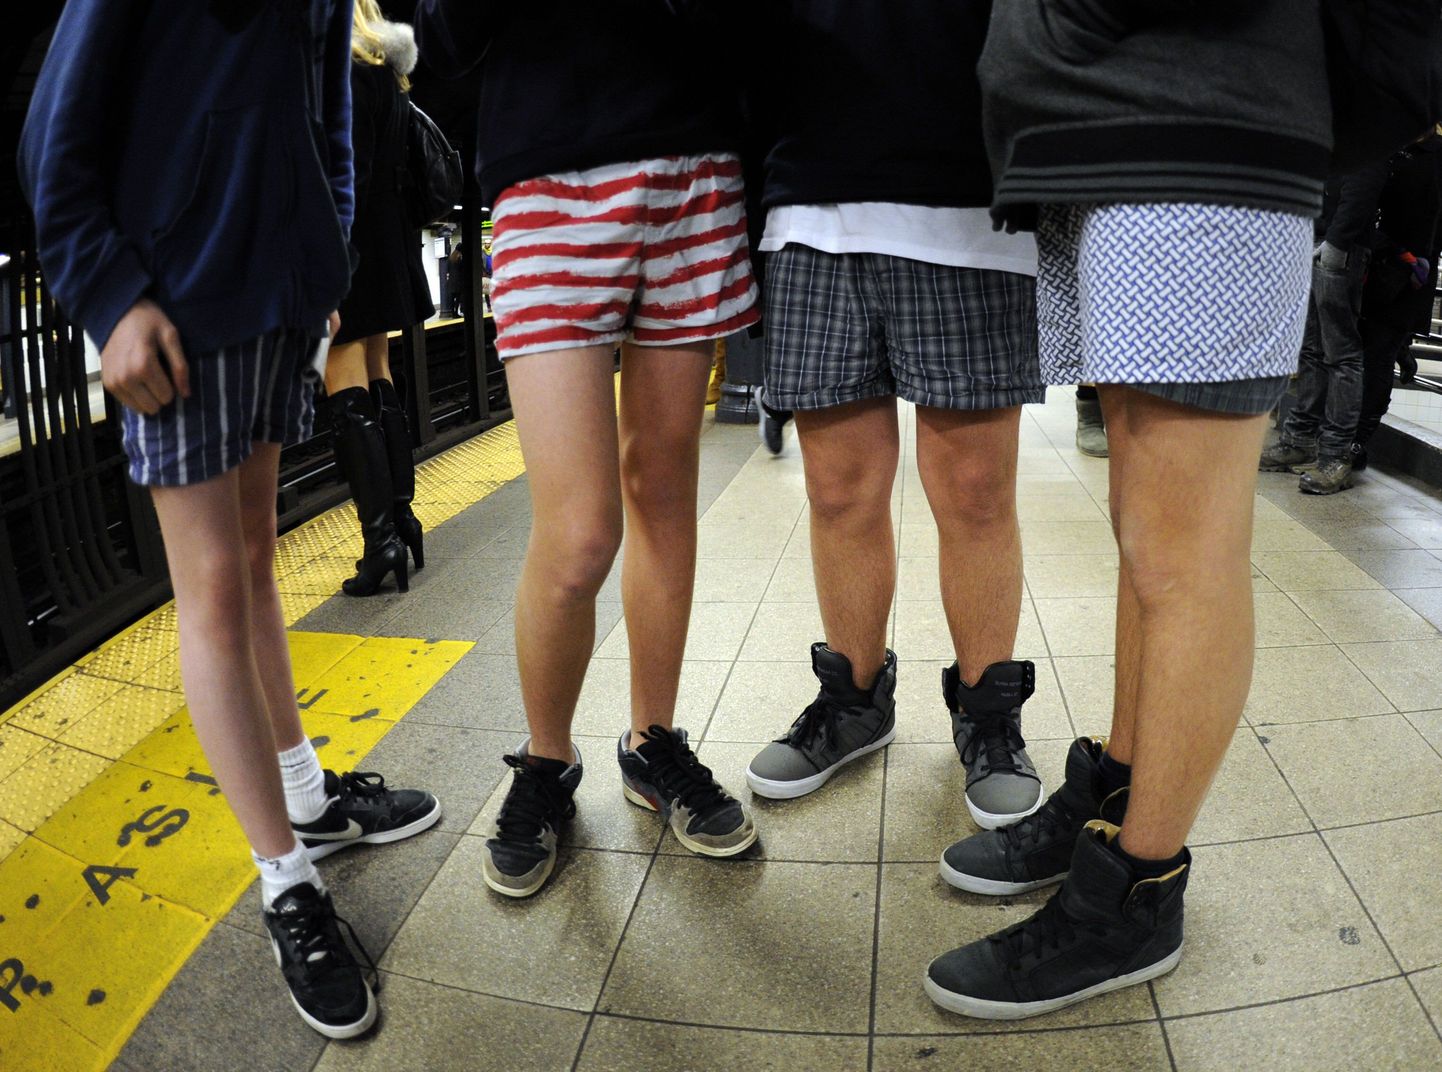 Фото сделано во время флешмоба "Без штанов в метро"